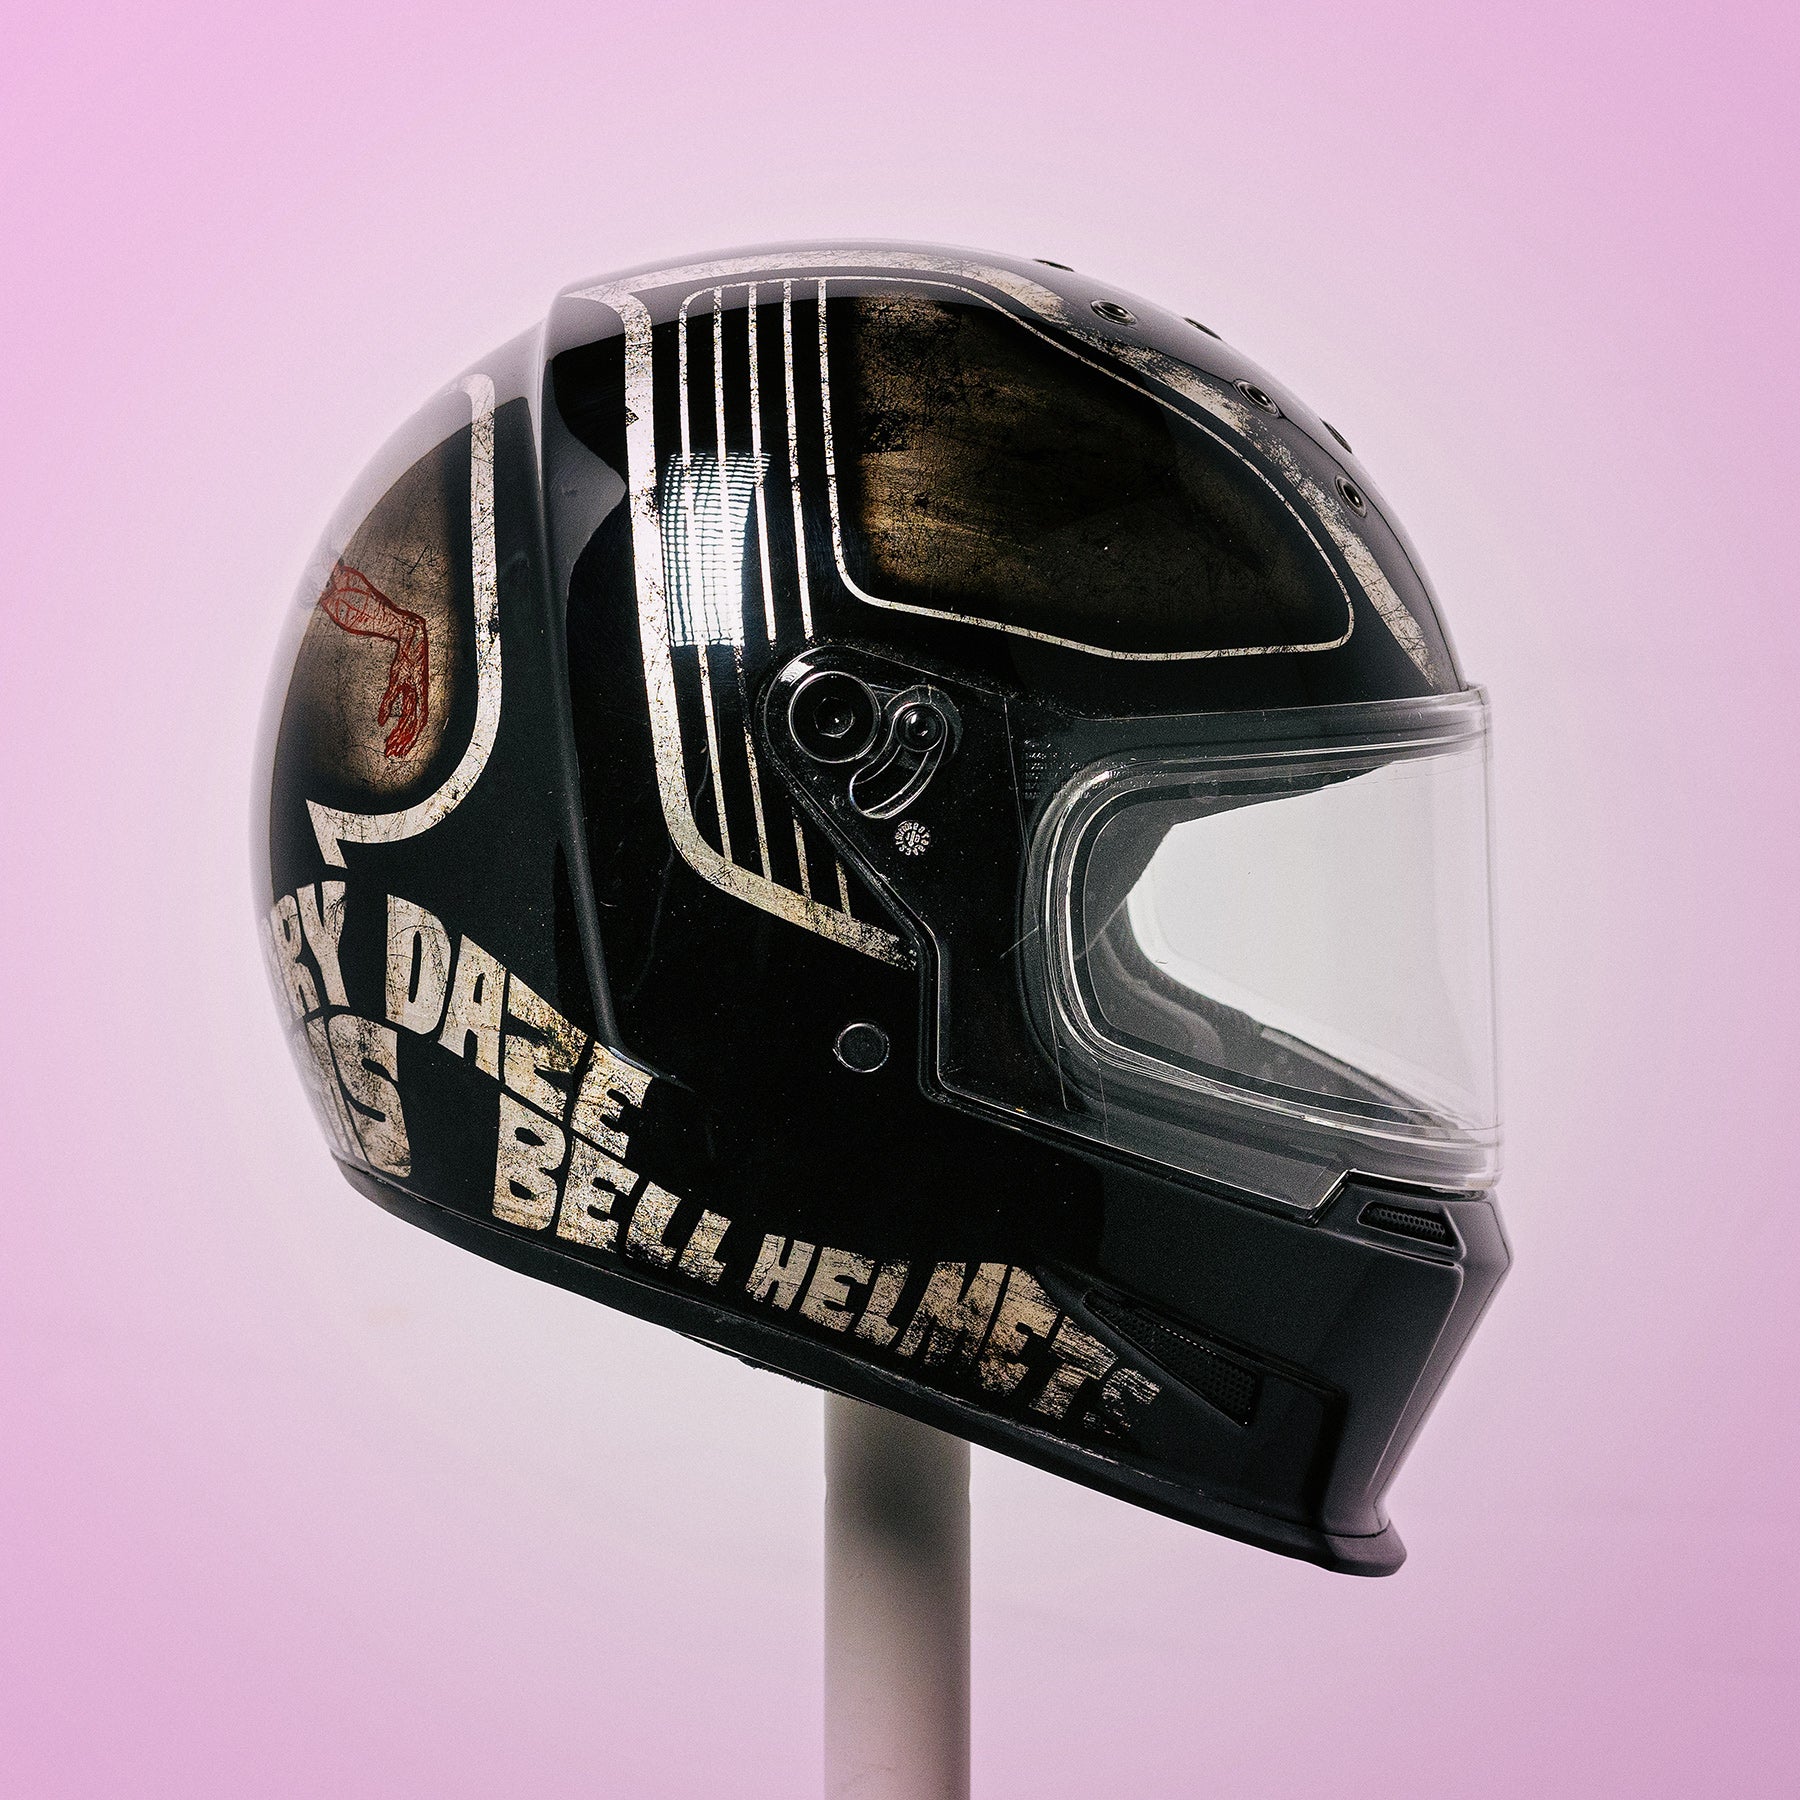 Trippy Ten helmet art show Pittsburgh Glory Daze motorcycle show Bell Helmets Krossover Customs